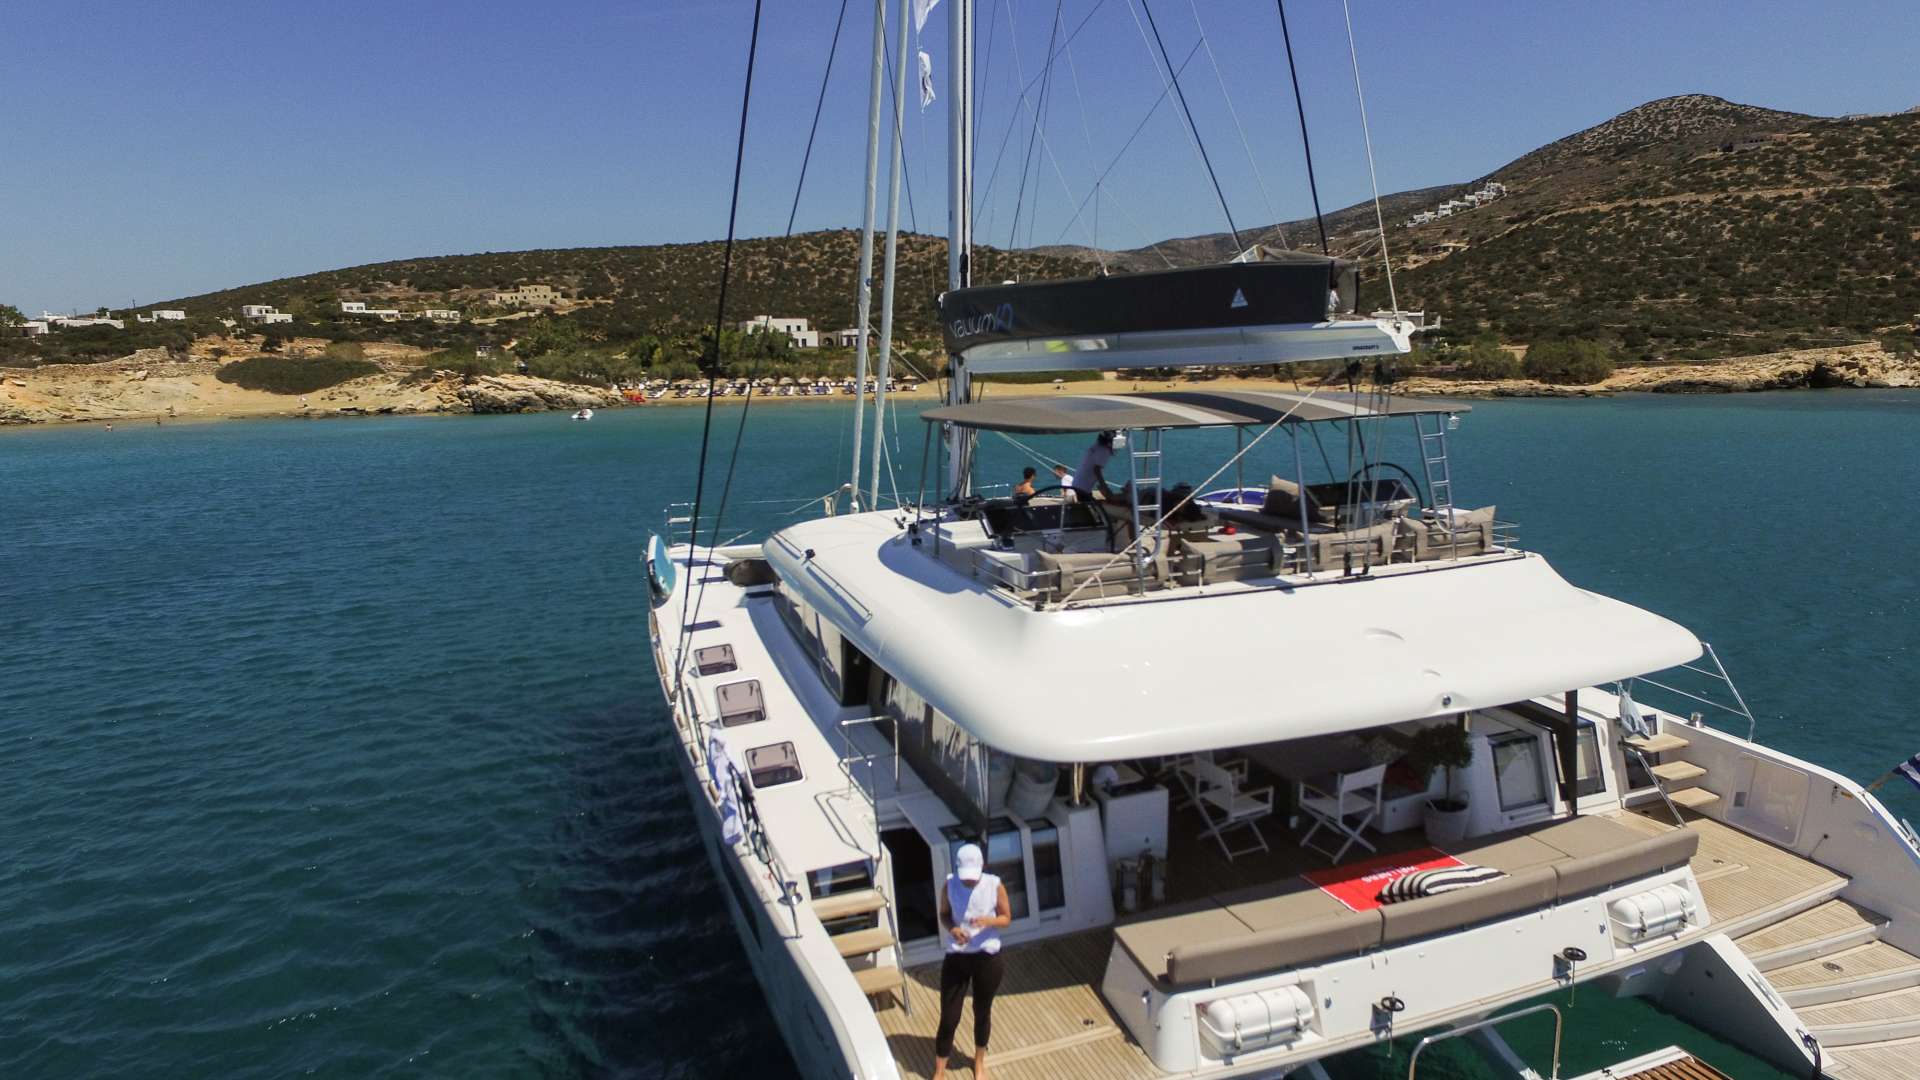 valium62 - Yacht Charter Mykonos & Boat hire in Greece 1